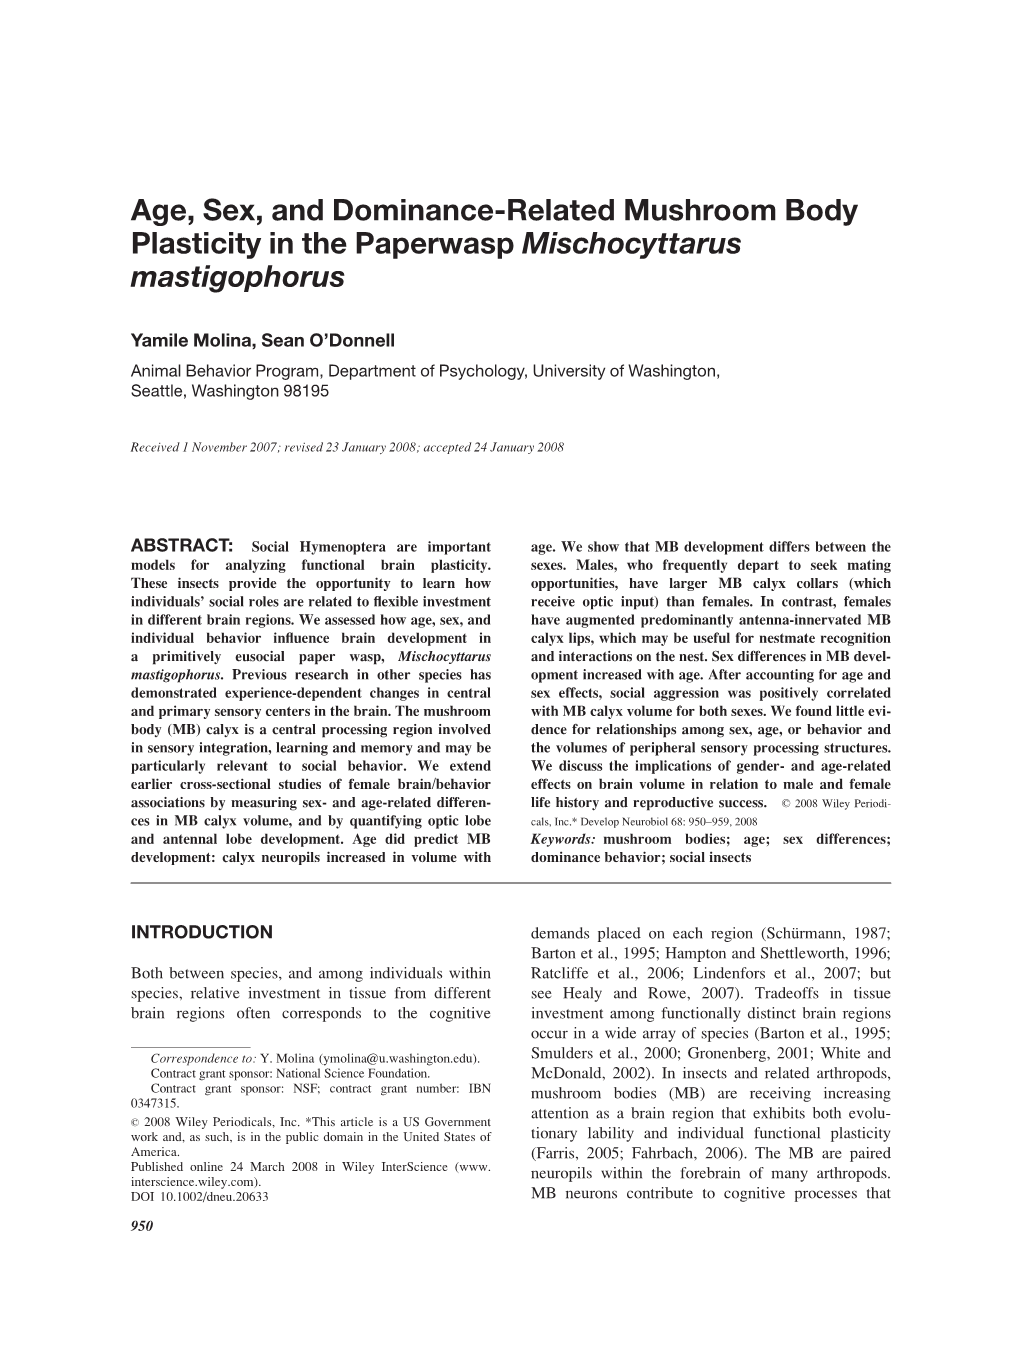 Age, Sex, and Dominance-Related Mushroom Body Plasticity in the Paperwasp Mischocyttarus Mastigophorus